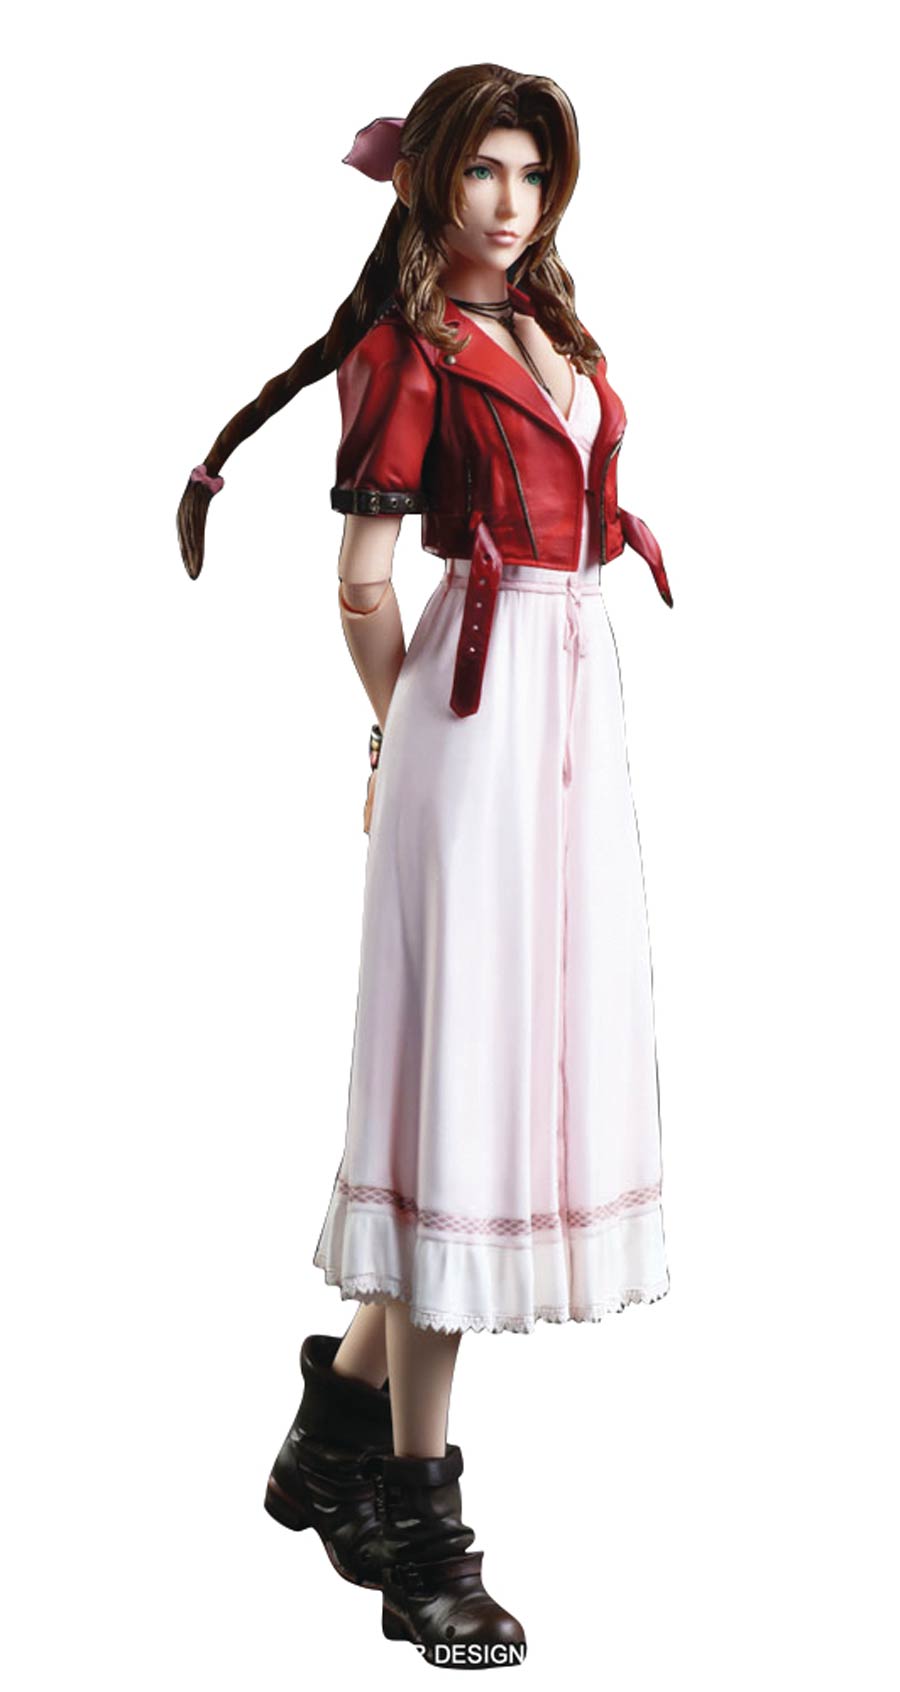 Final Fantasy VII Remake Play Arts Kai Action Figure - Aerith Gainsborough